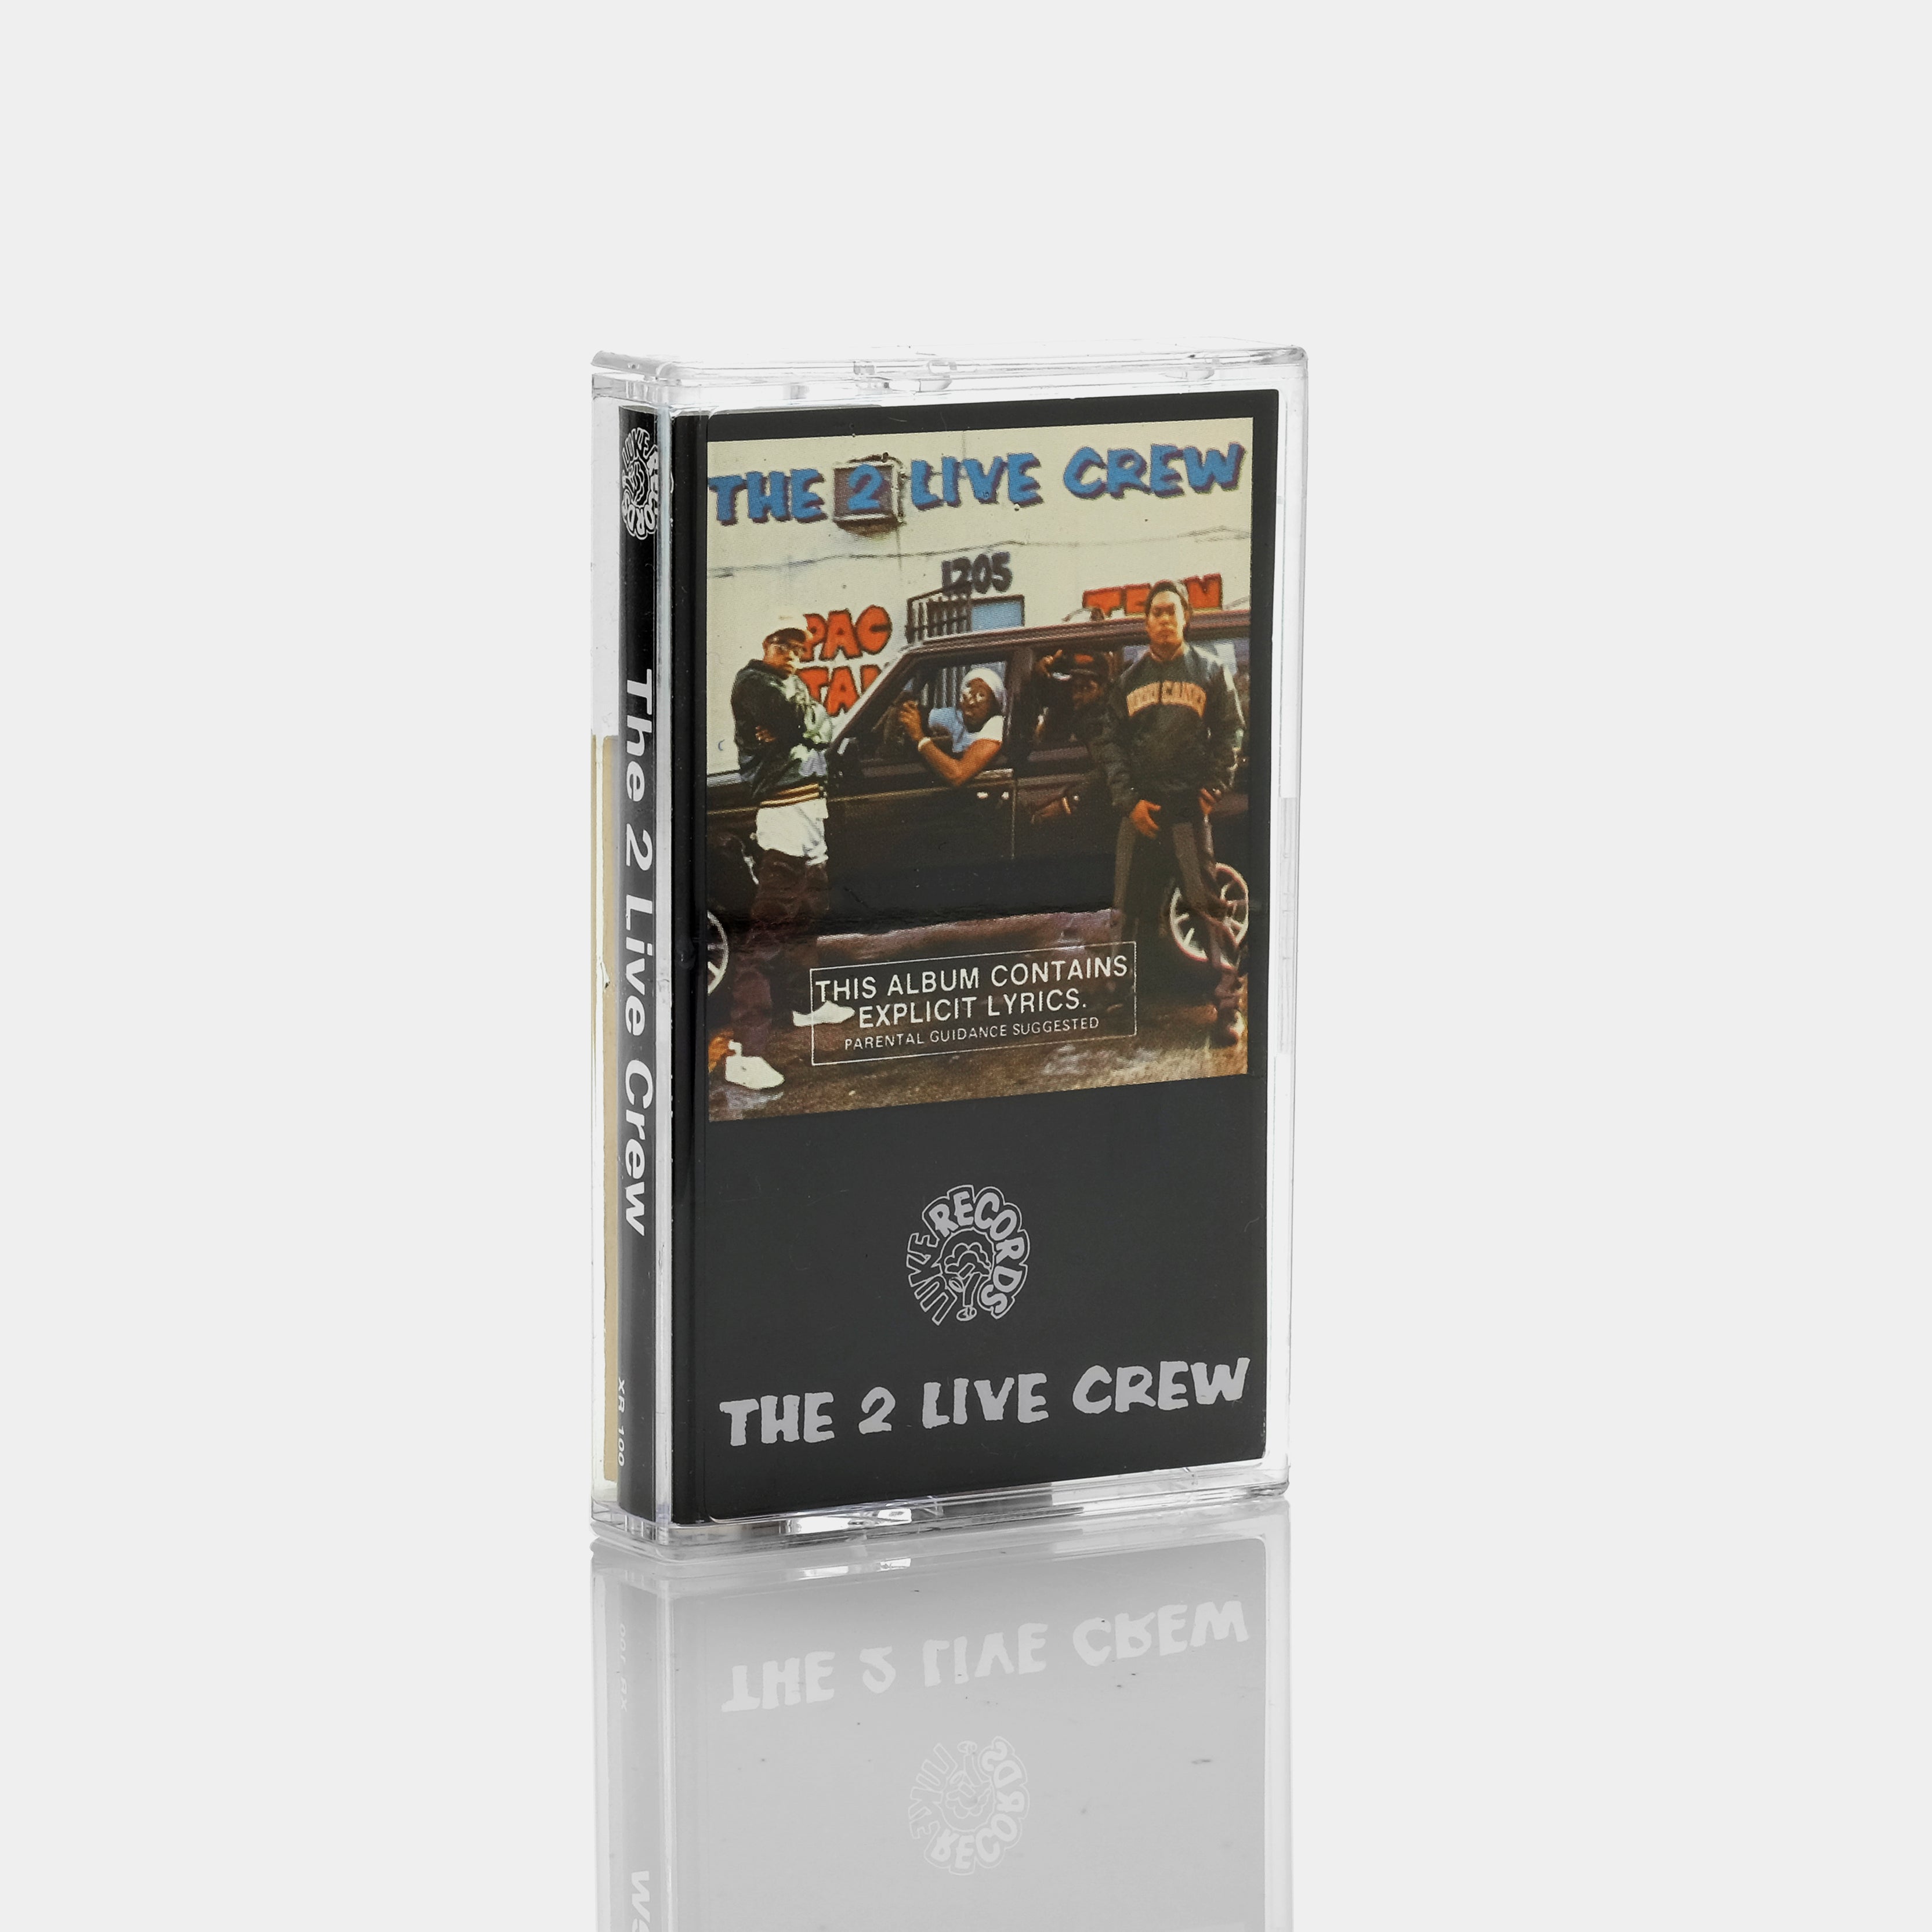 The 2 Live Crew - The 2 Live Crew Cassette Tape